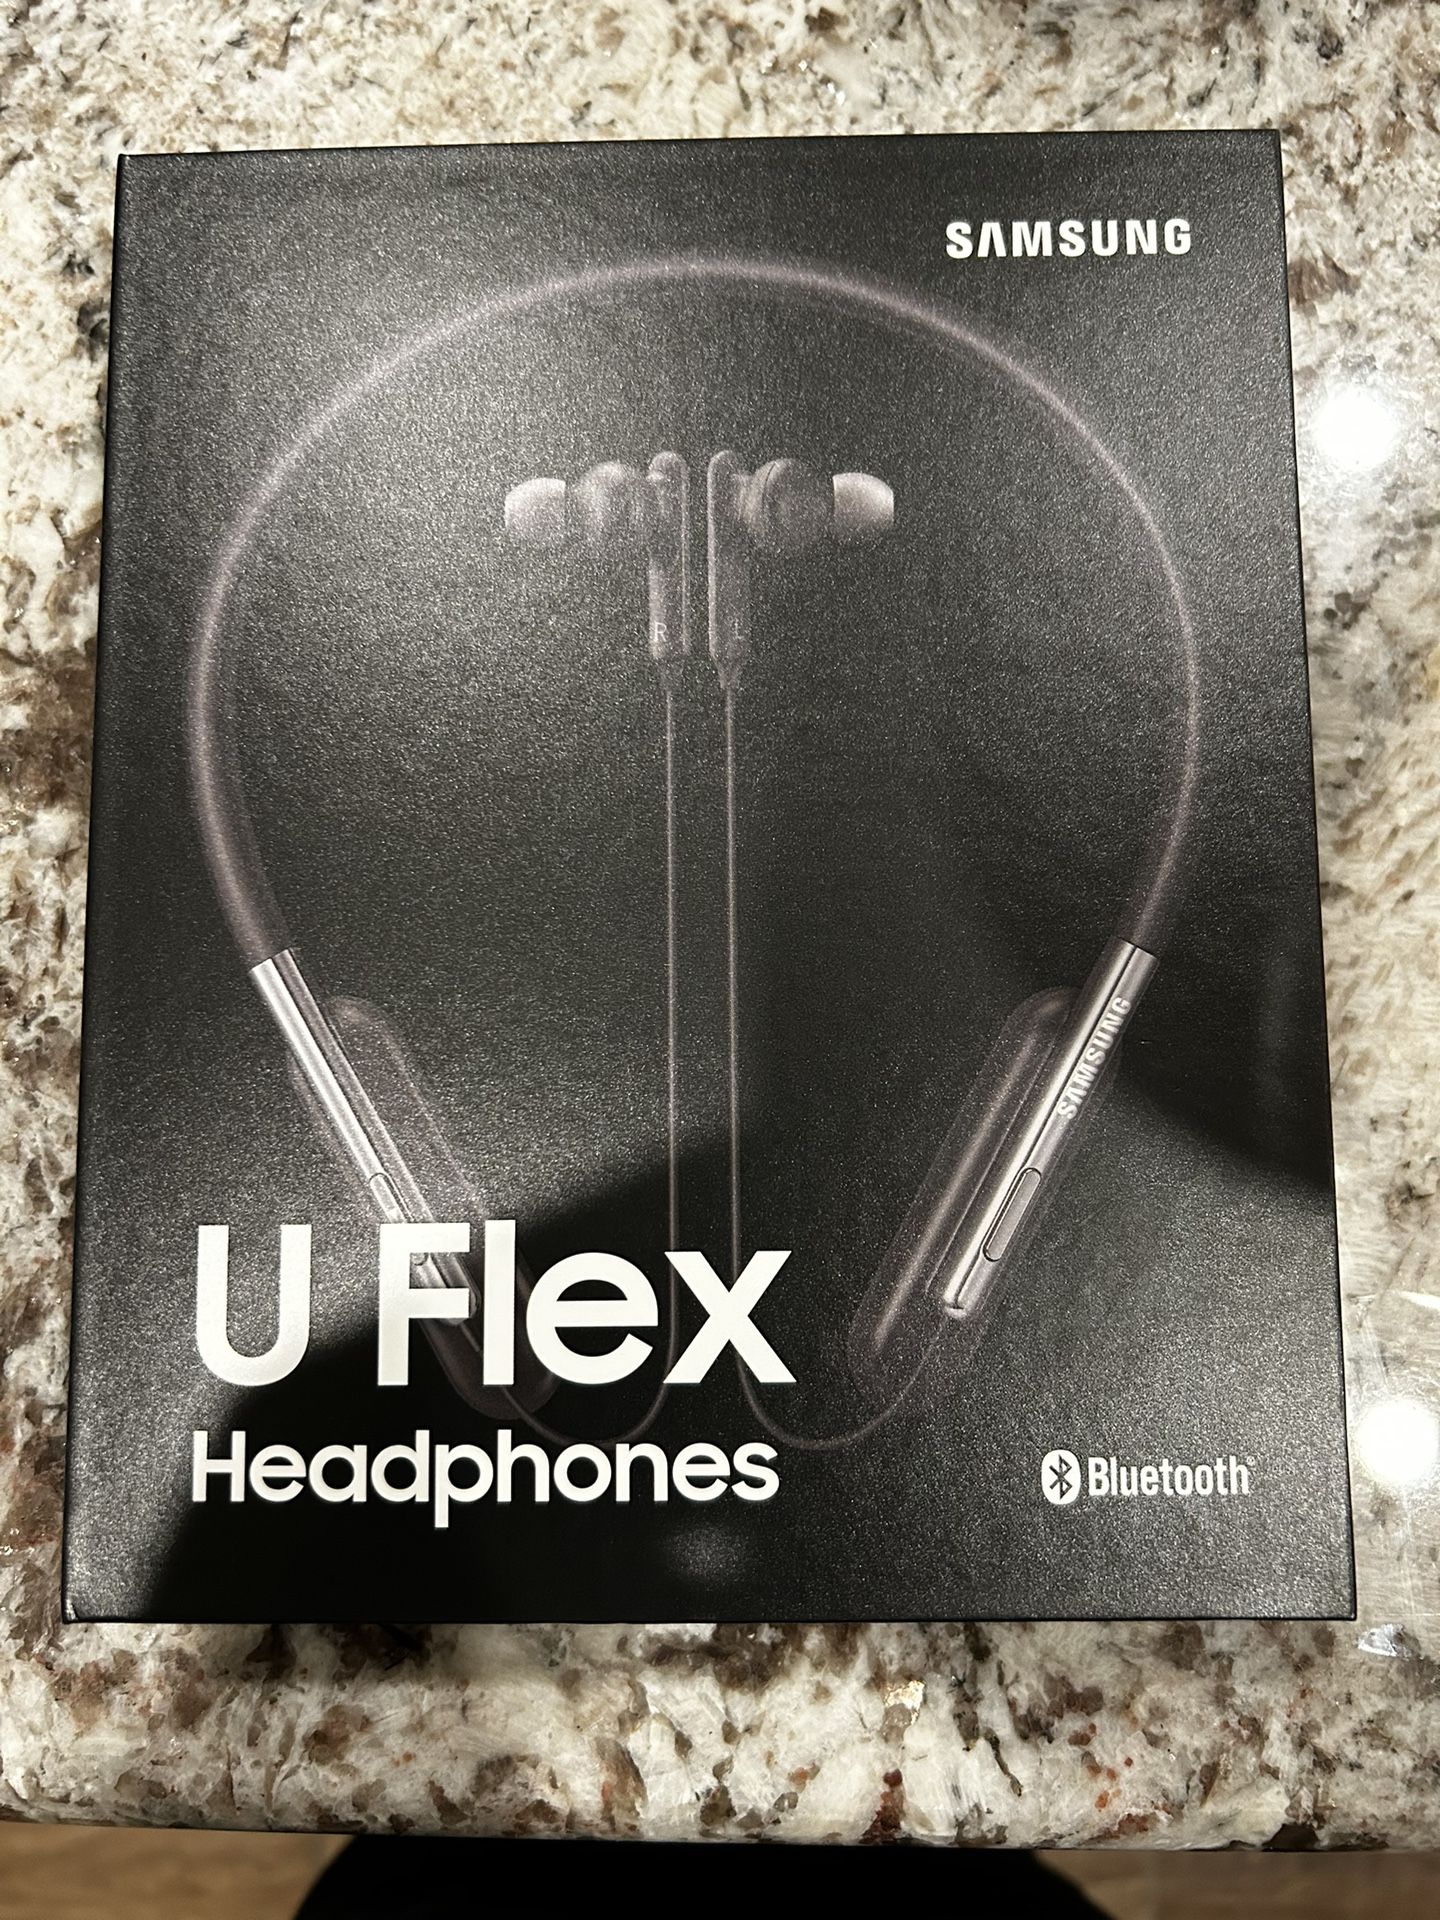 Samsung Uflex Headphones 